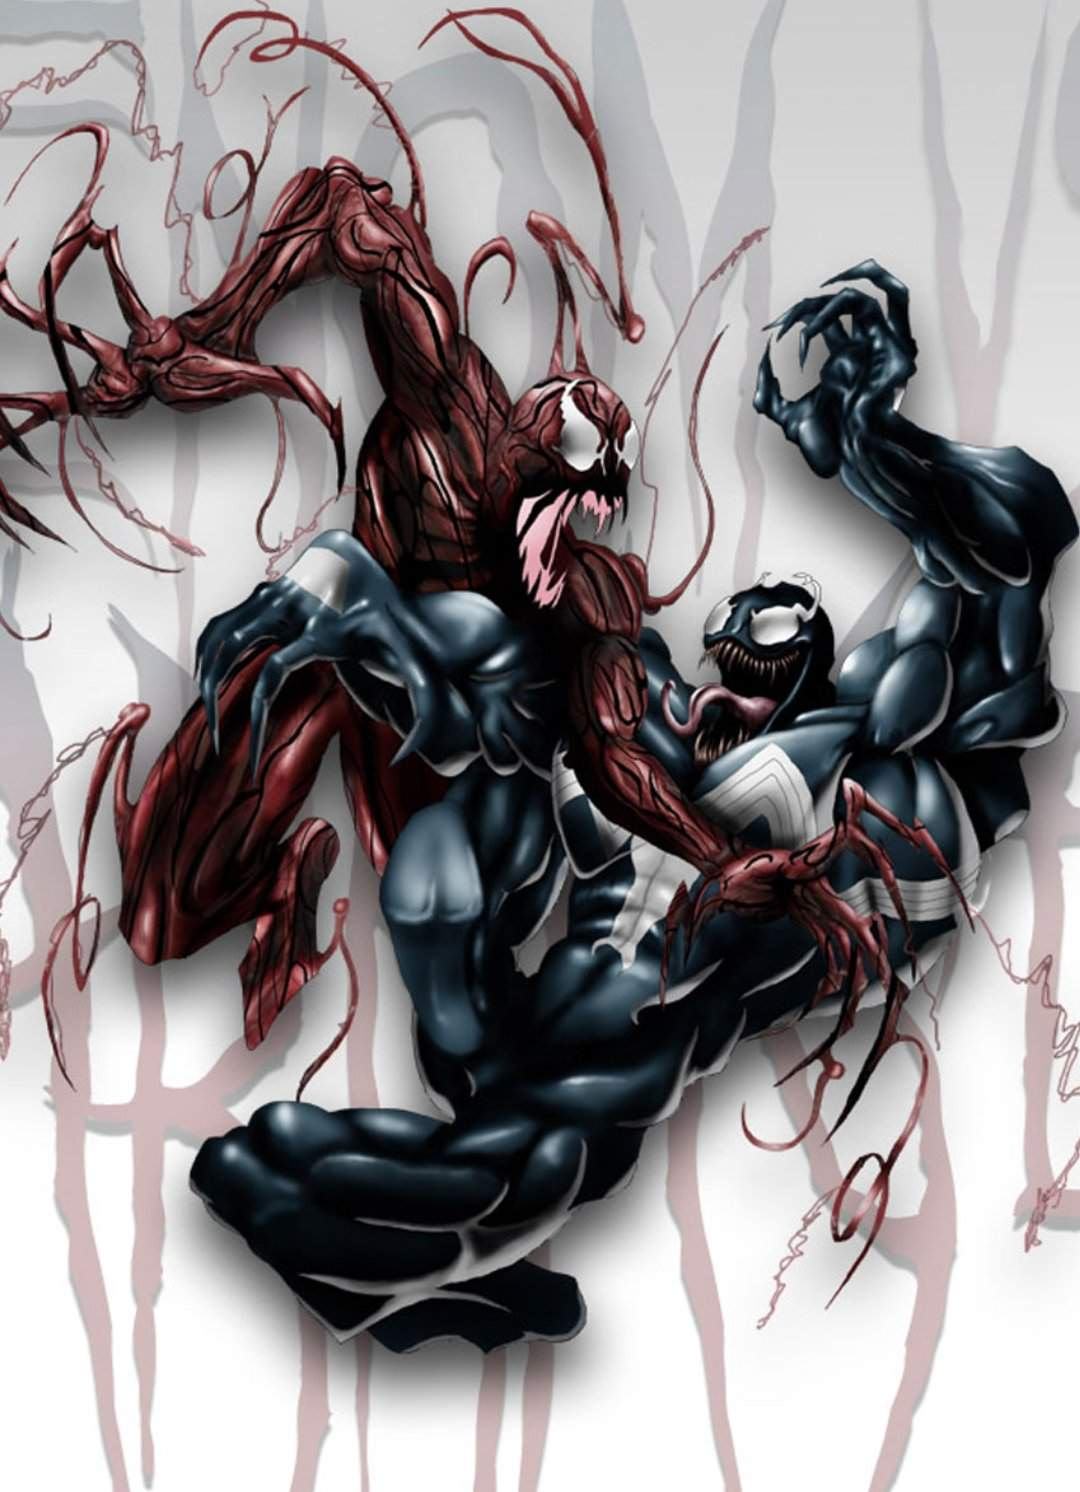 Манга токсин 12 глава. Человек паук Веном и Карнаж. Веном 2 Карнаж человек паук. Симбиот Веном. Человек паук симбиот Карнаж.